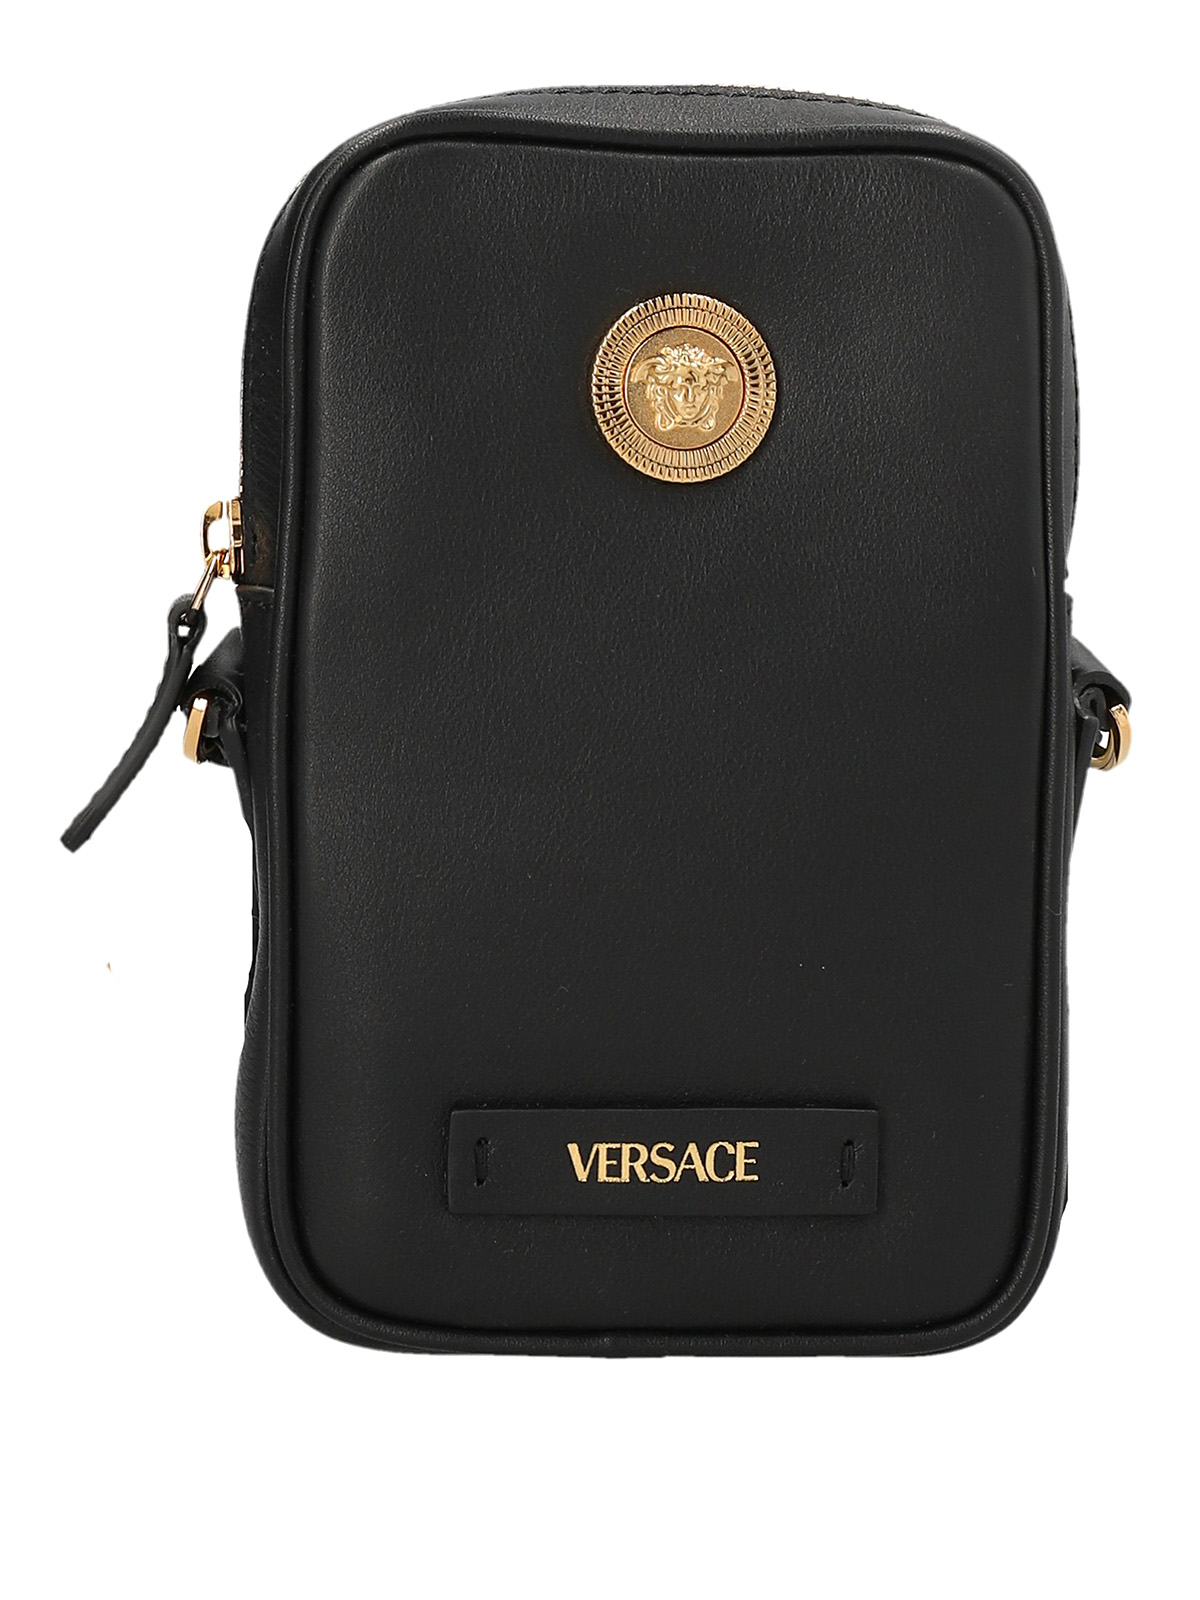 Versace Medusa Leather Crossbody Bag